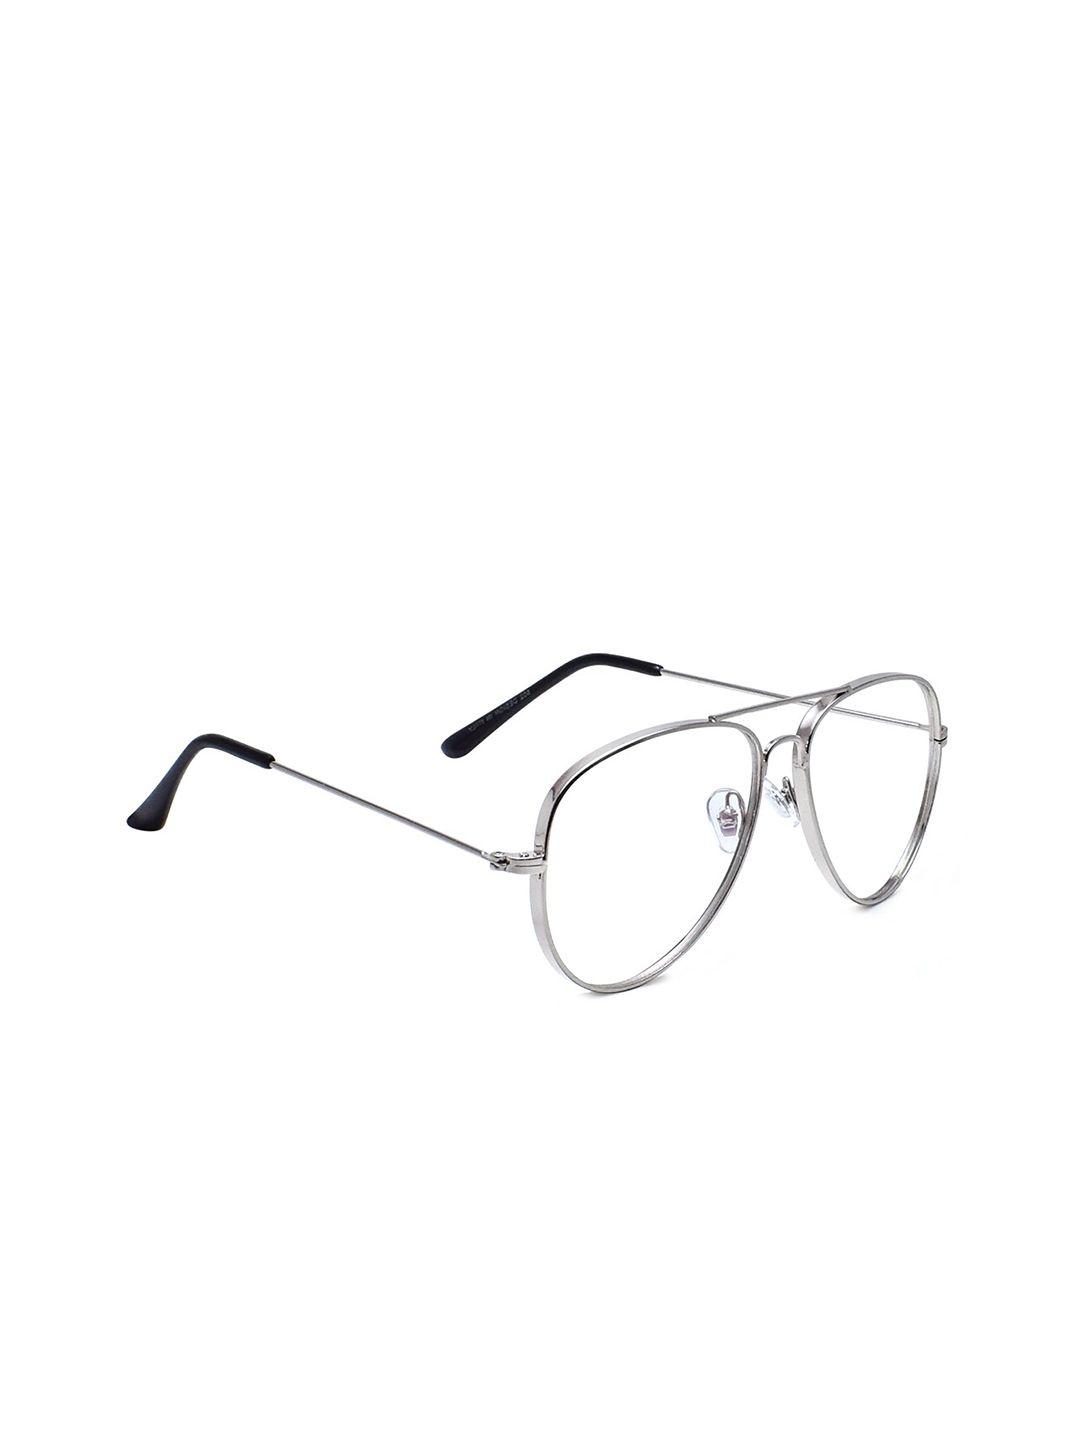 peter jones eyewear unisex silver & transparent anti glare aviator frames tk002s